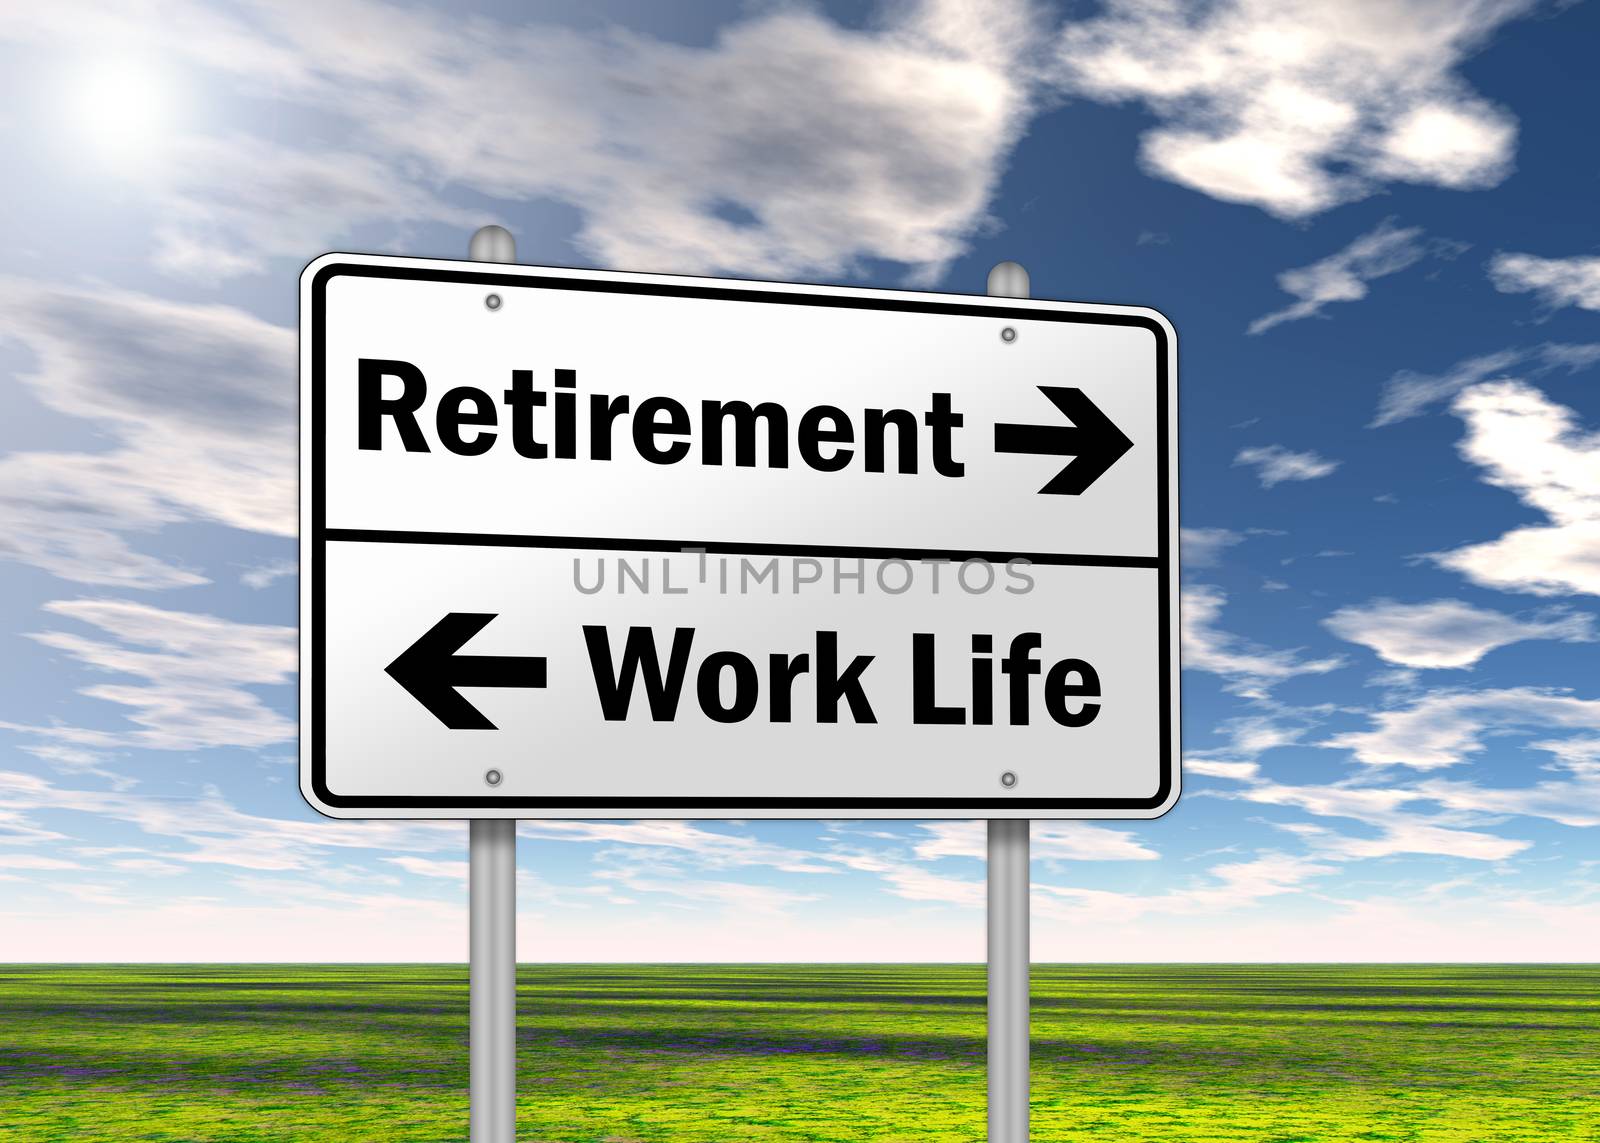 Traffic Sign "Retirement vs. Work Life"